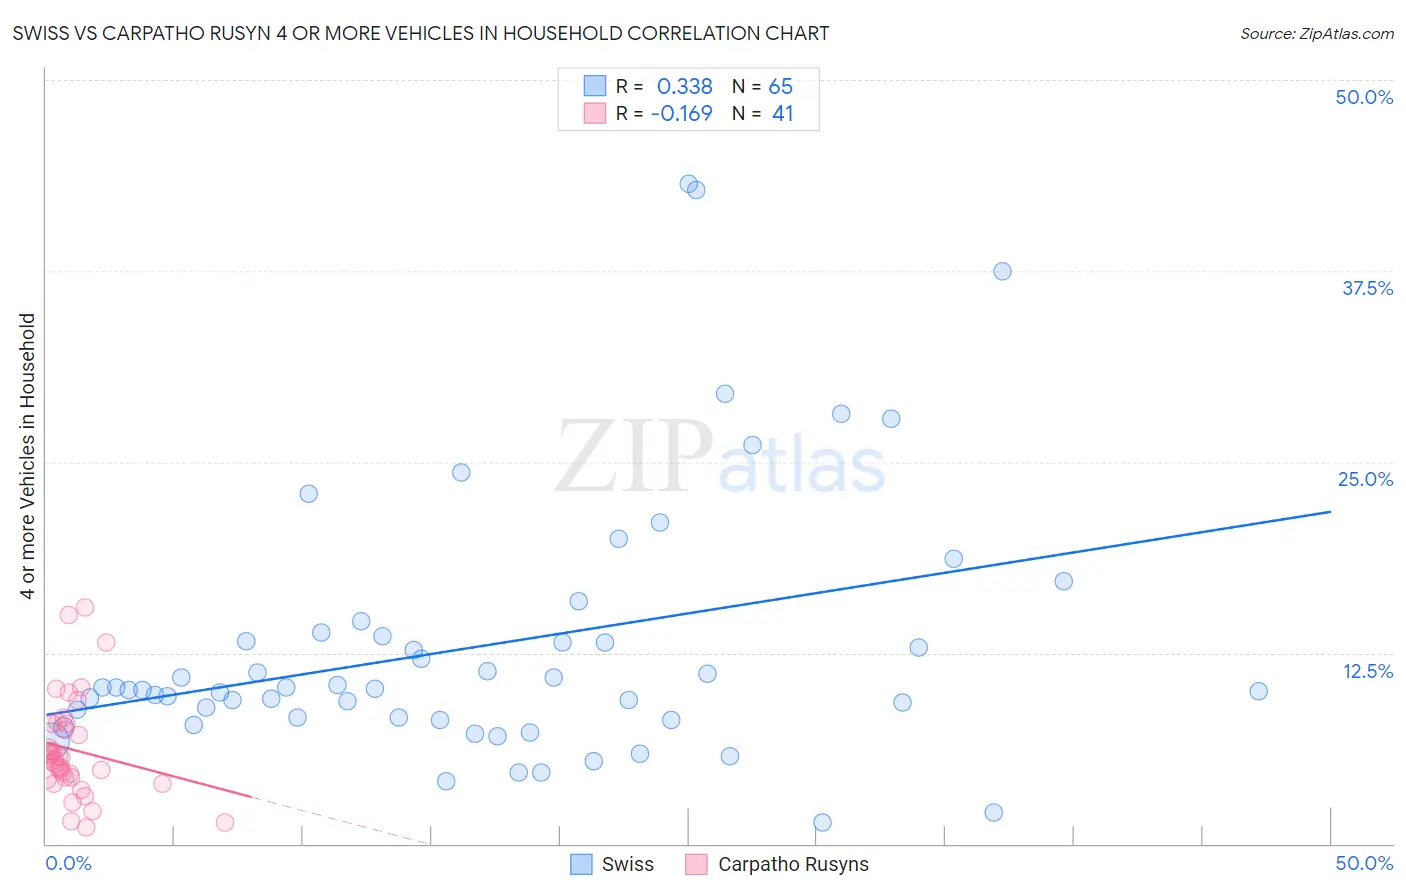 Swiss vs Carpatho Rusyn 4 or more Vehicles in Household